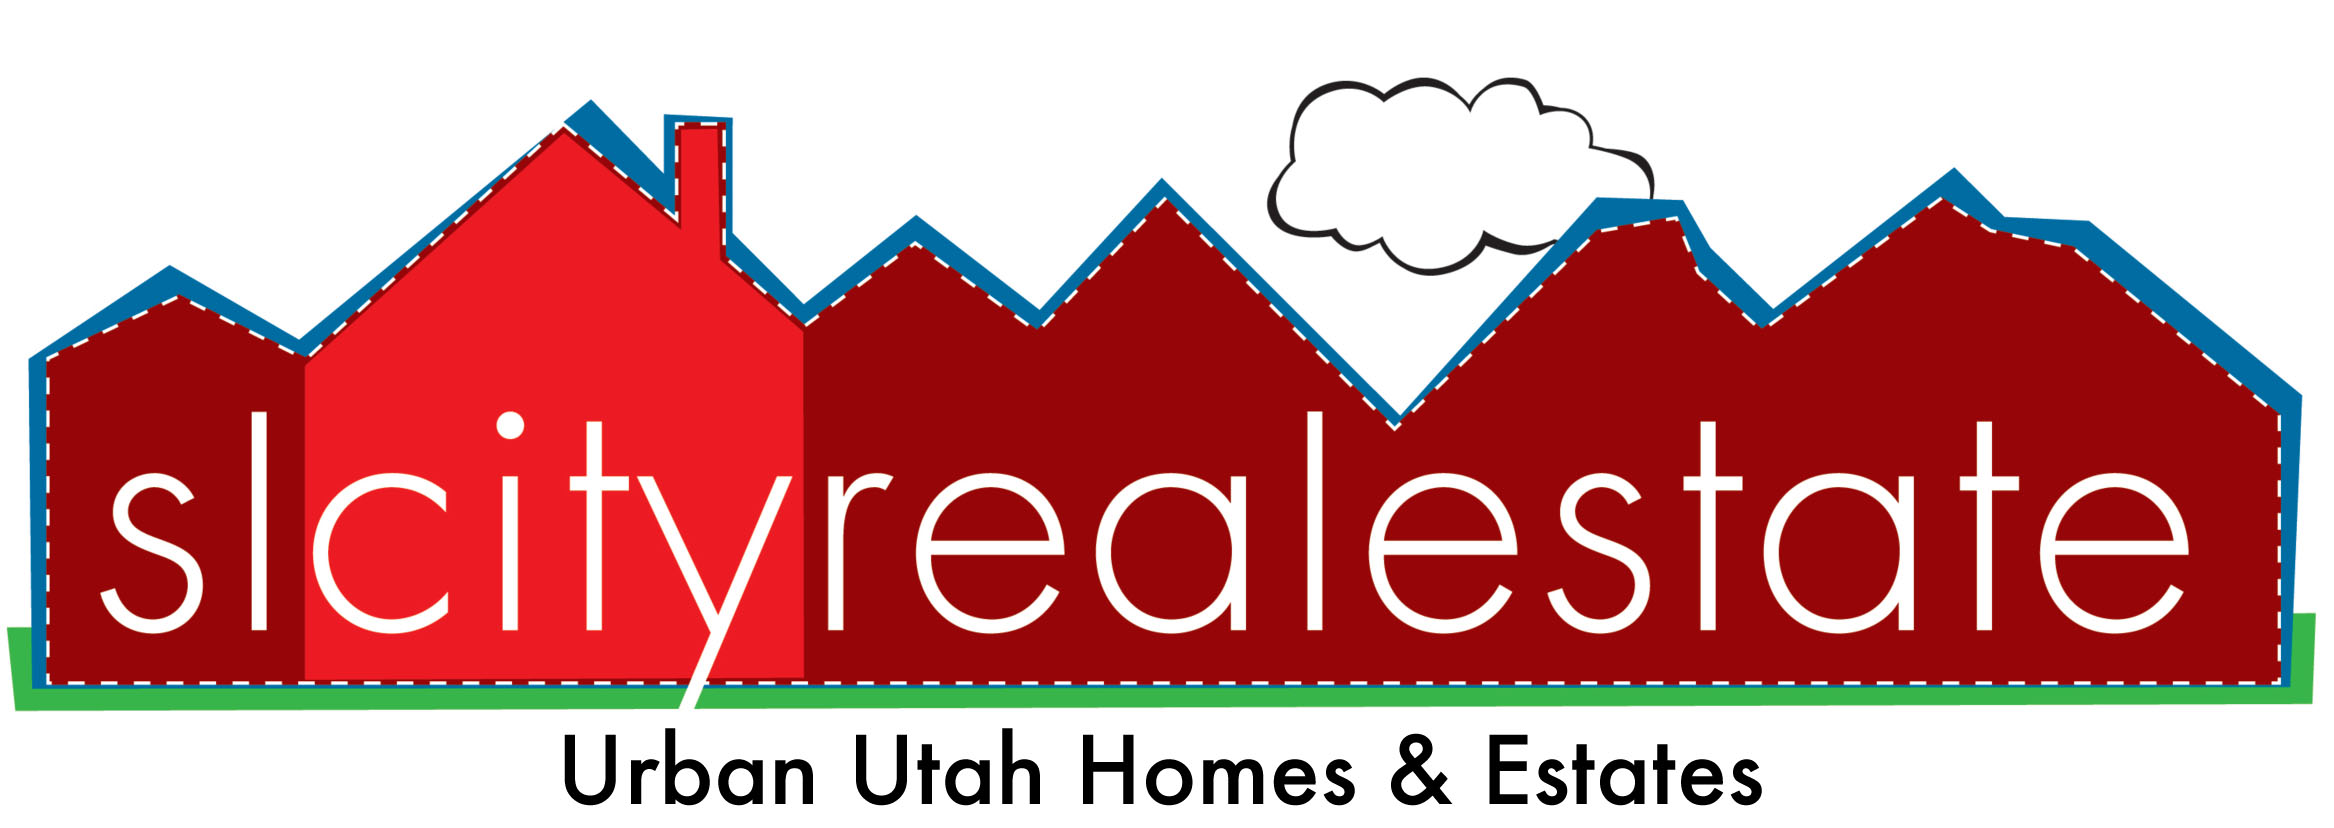 Urban Utah Homes Estates